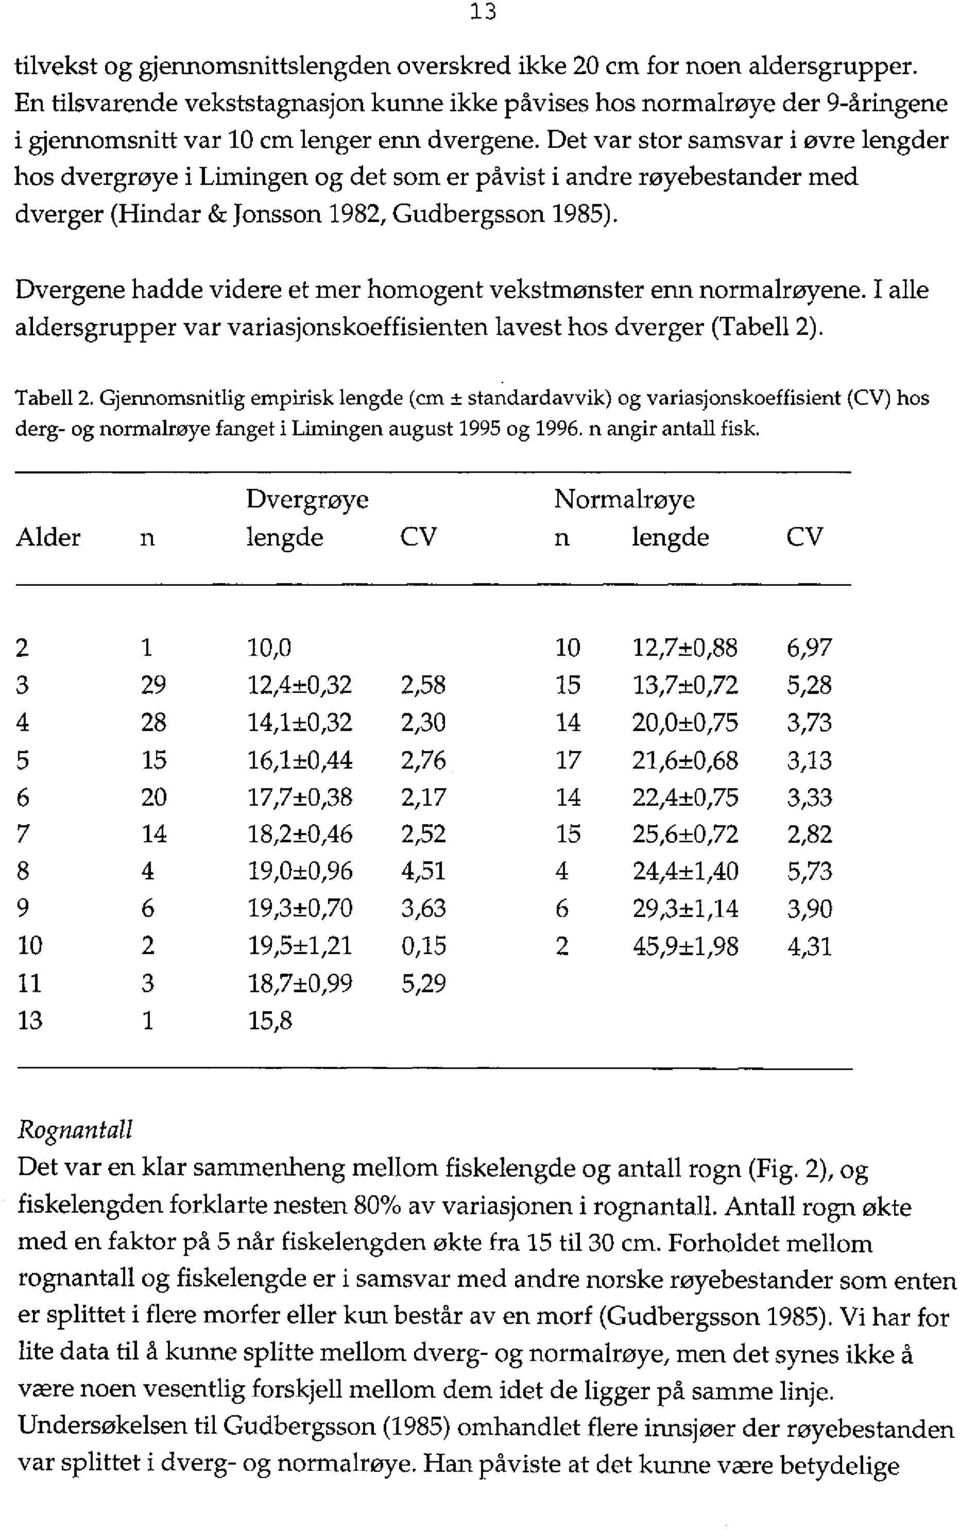 Det var stor samsvar i øvre lengder hos dvergrøye i Limingen og det som er påvist i andre røyebestander med dverger (Hindar & Jonsson 1982, Gudbergsson 1985).